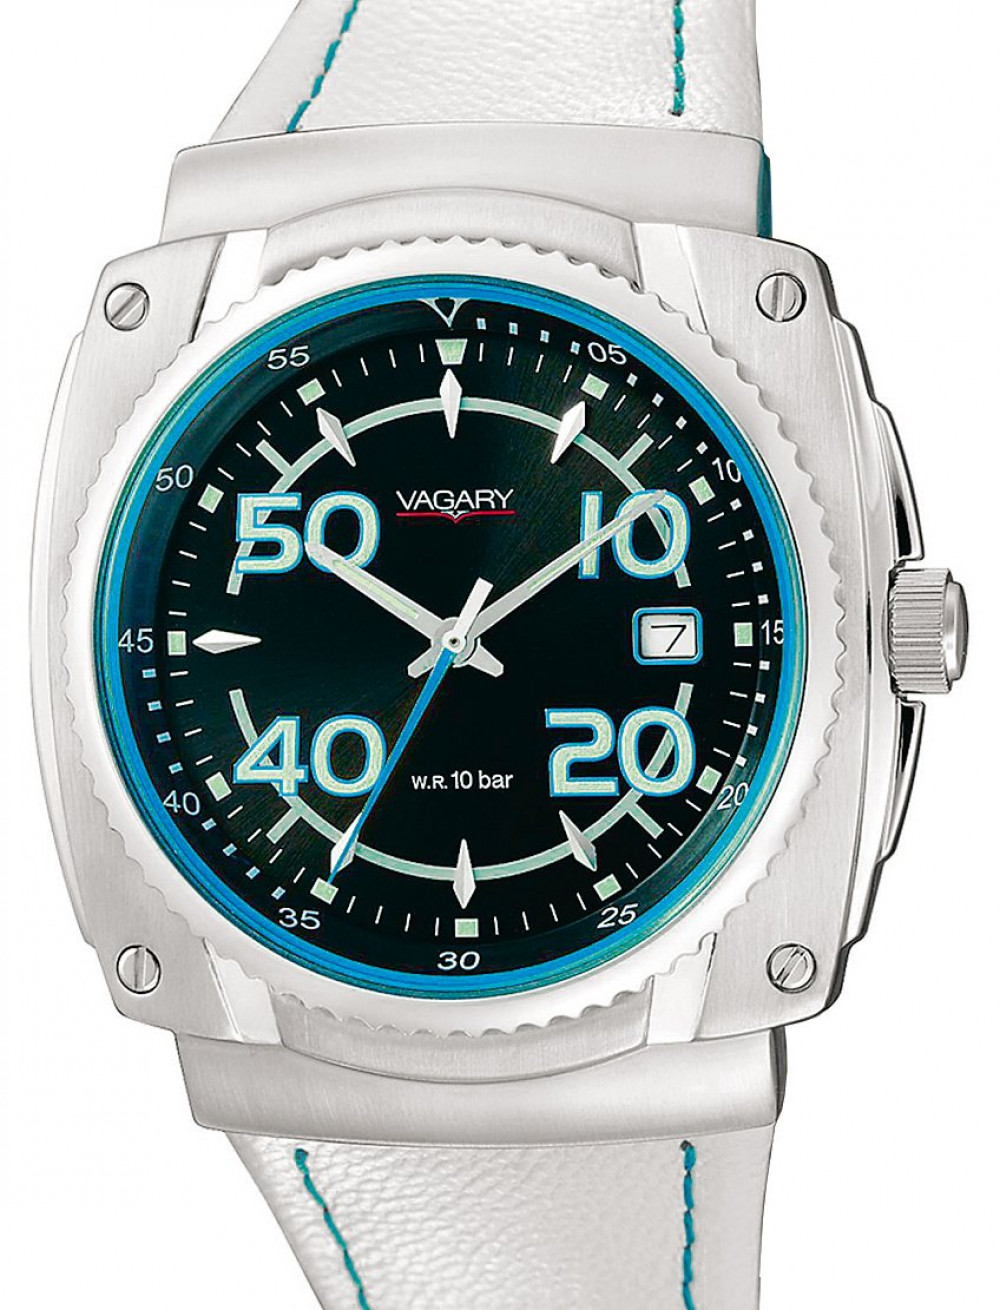 Zegarek firmy Vagary, model Coolness